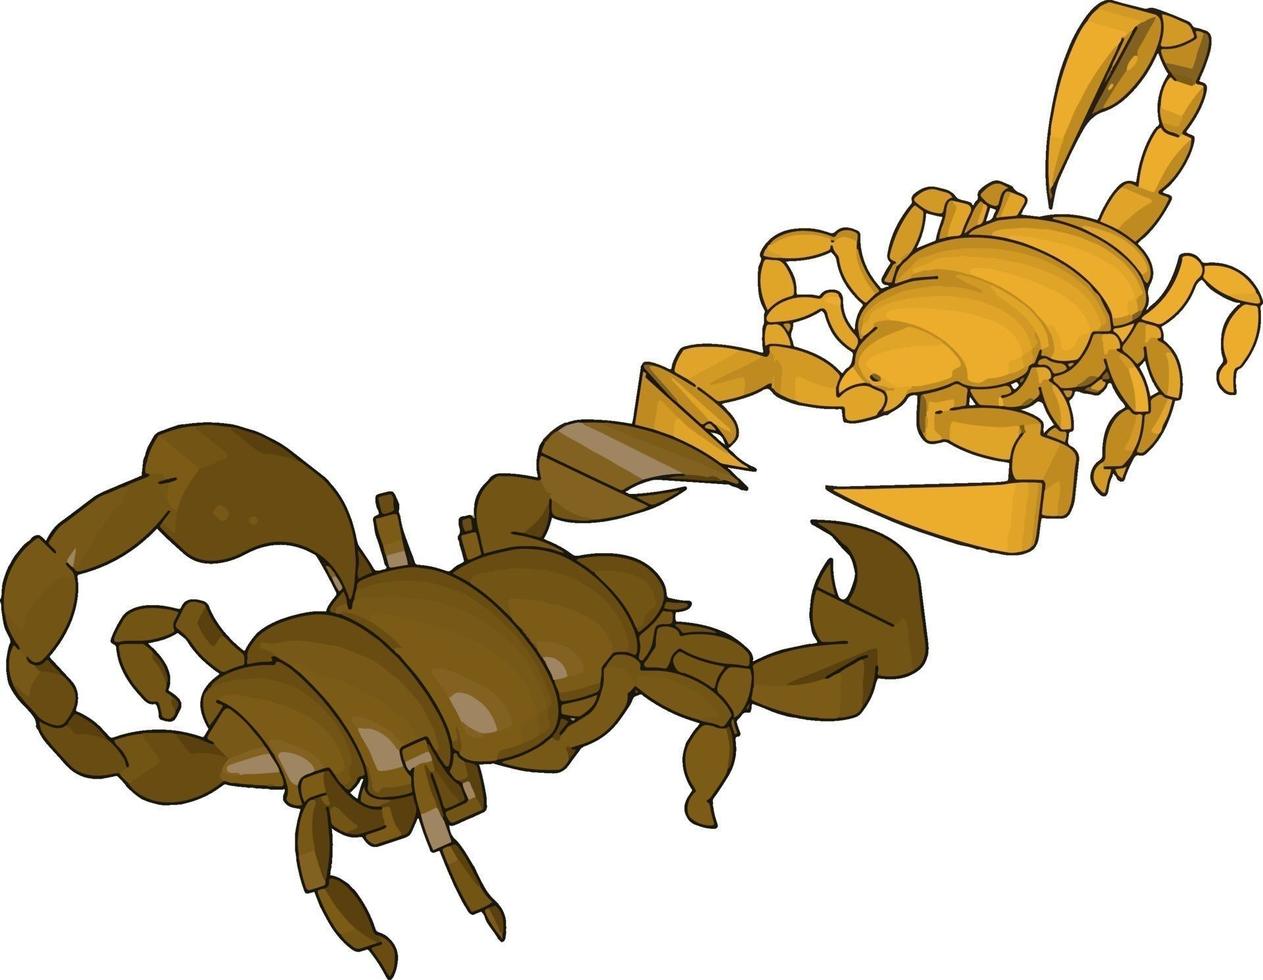 läge av en 3d skorpion, illustration, vektor på vit bakgrund.